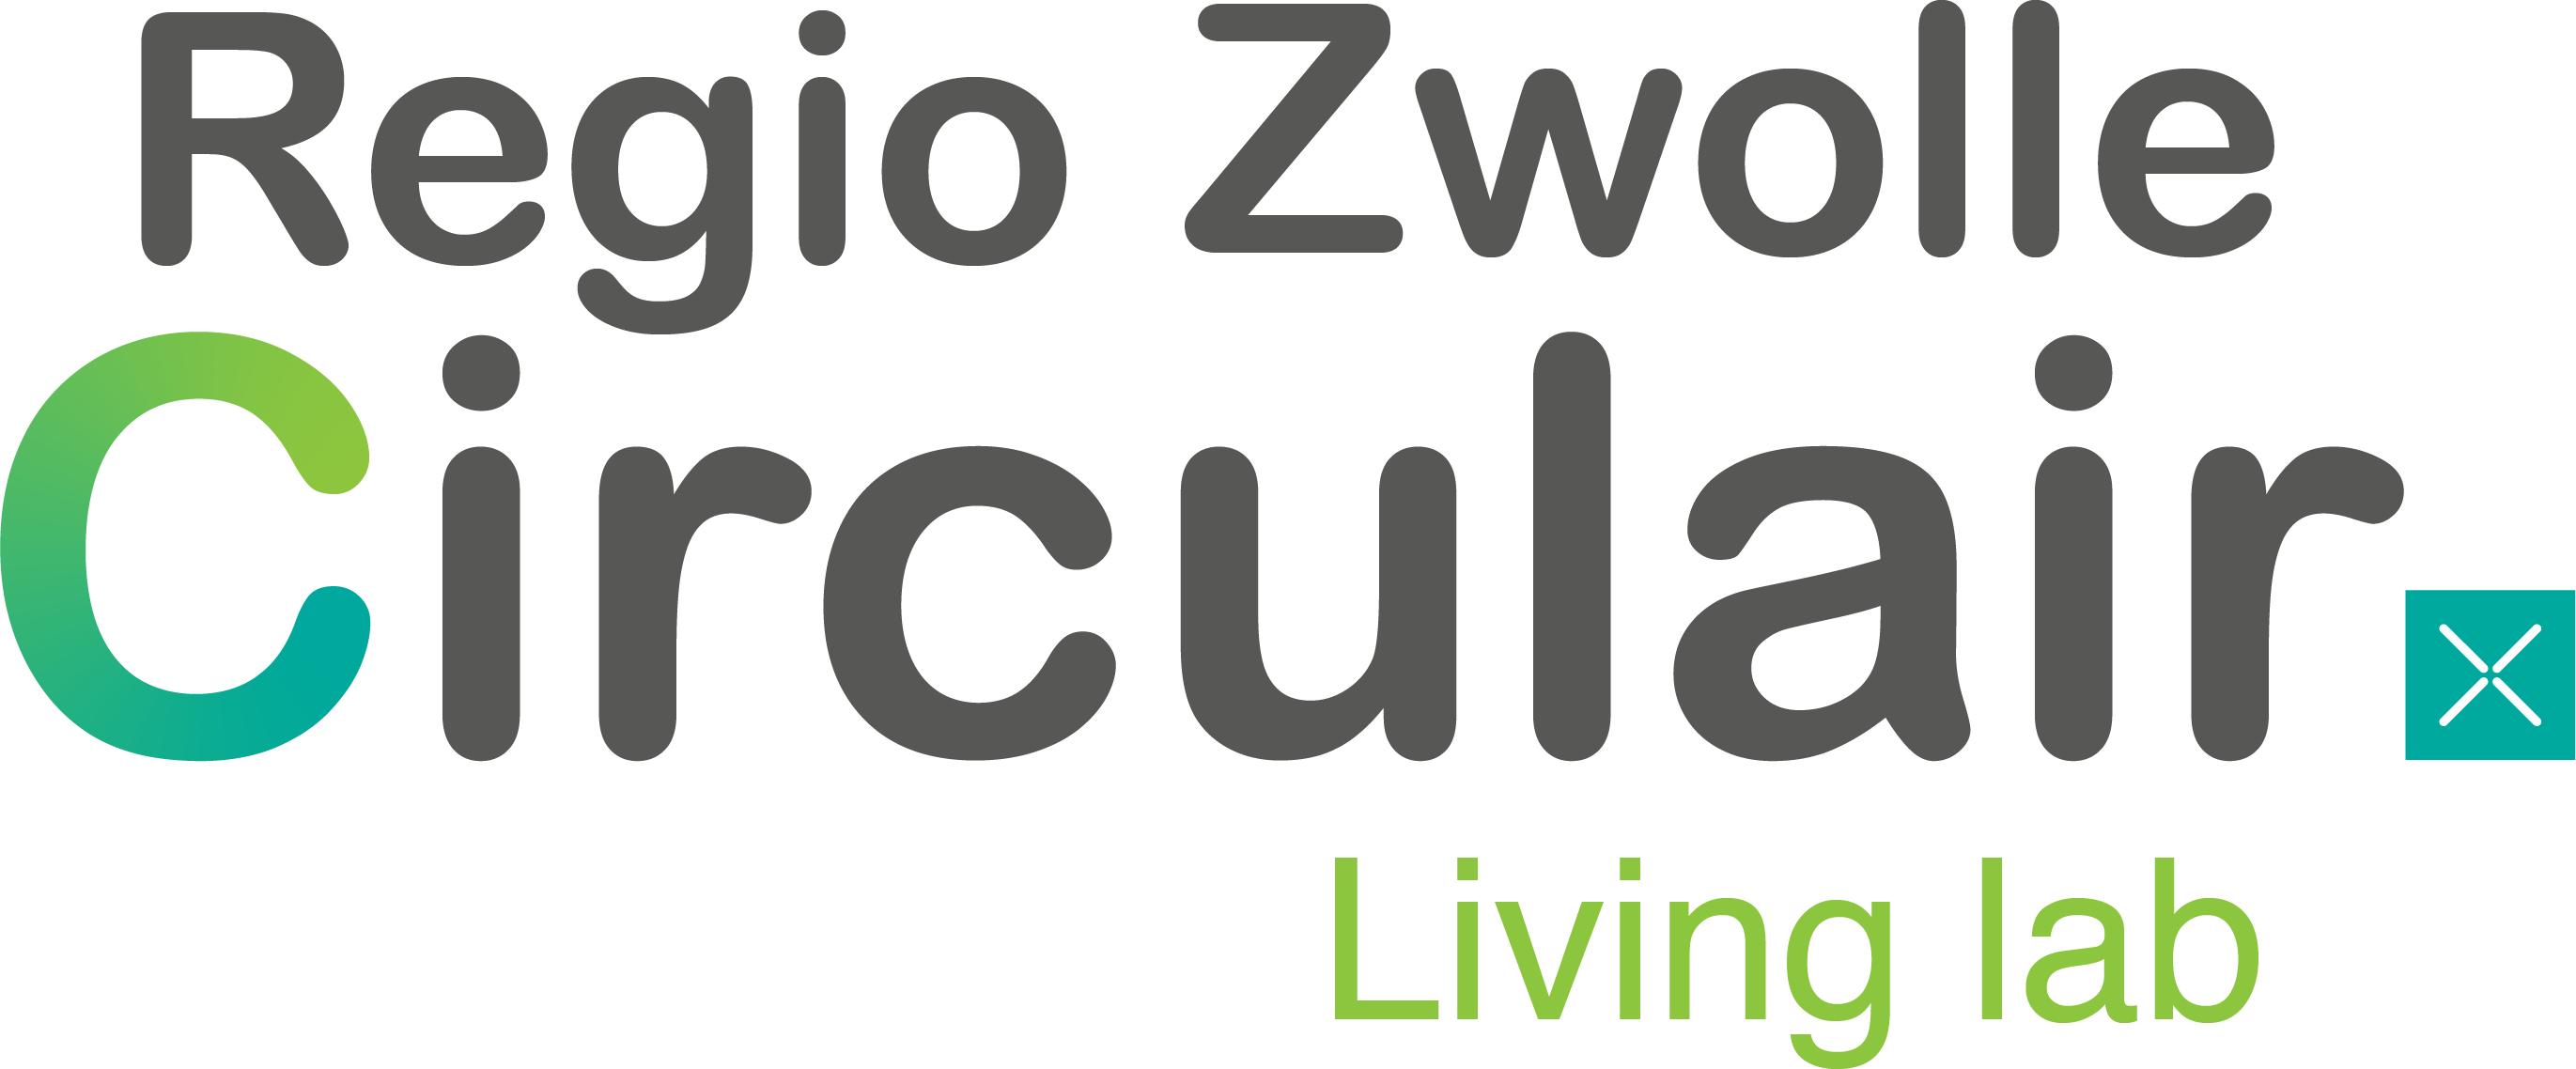 Regio Zwolle Circulair